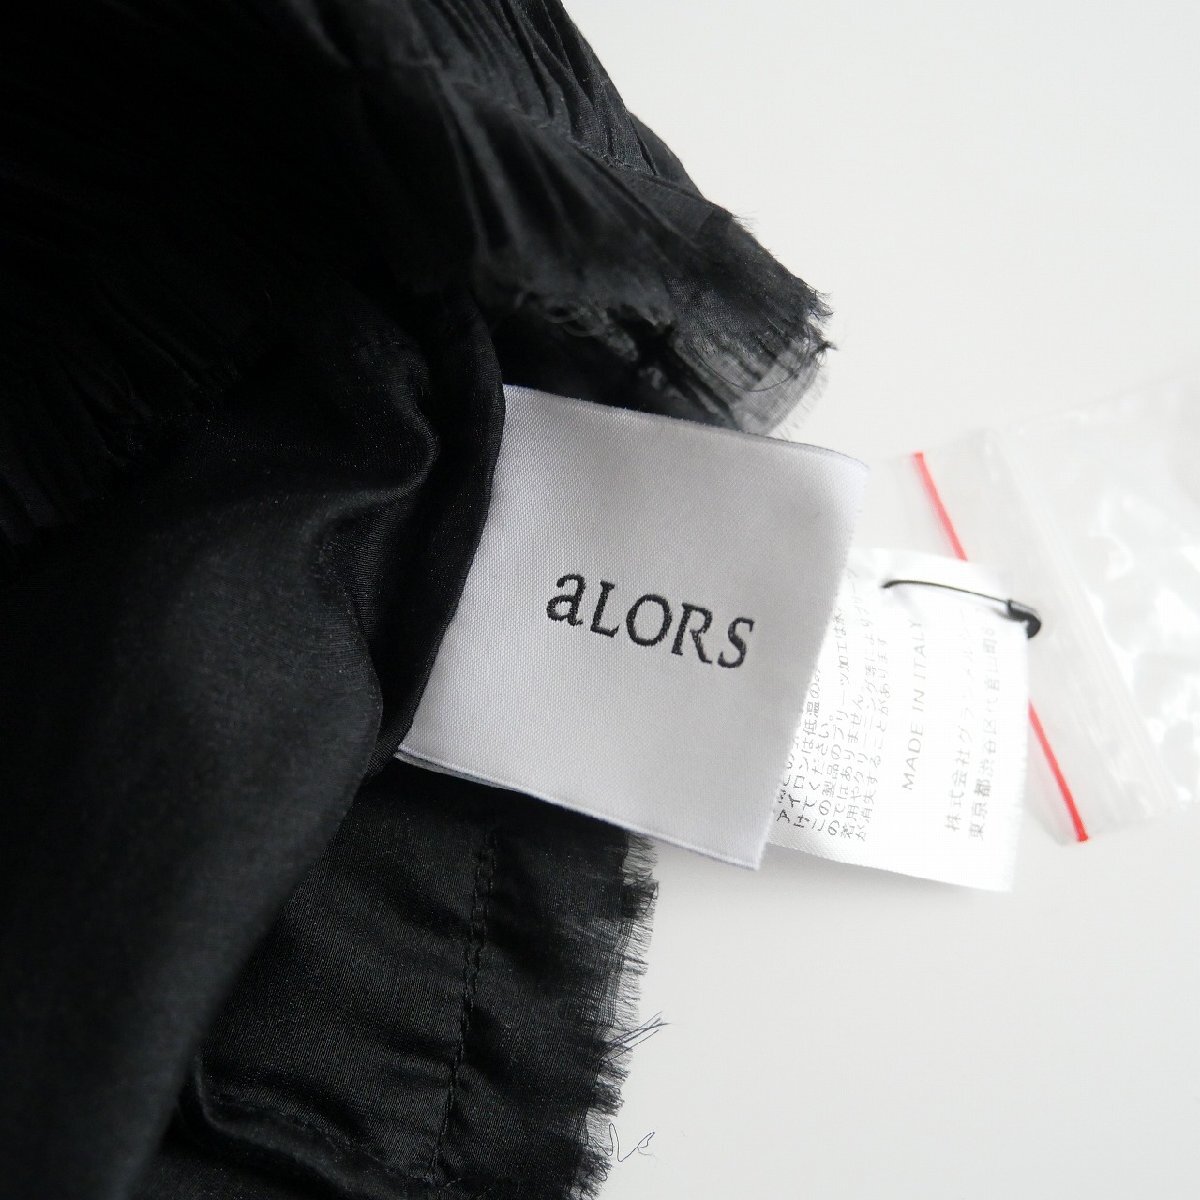 2023 / aLORS Arrow / Coquillage blouse 1 / 2403-1020